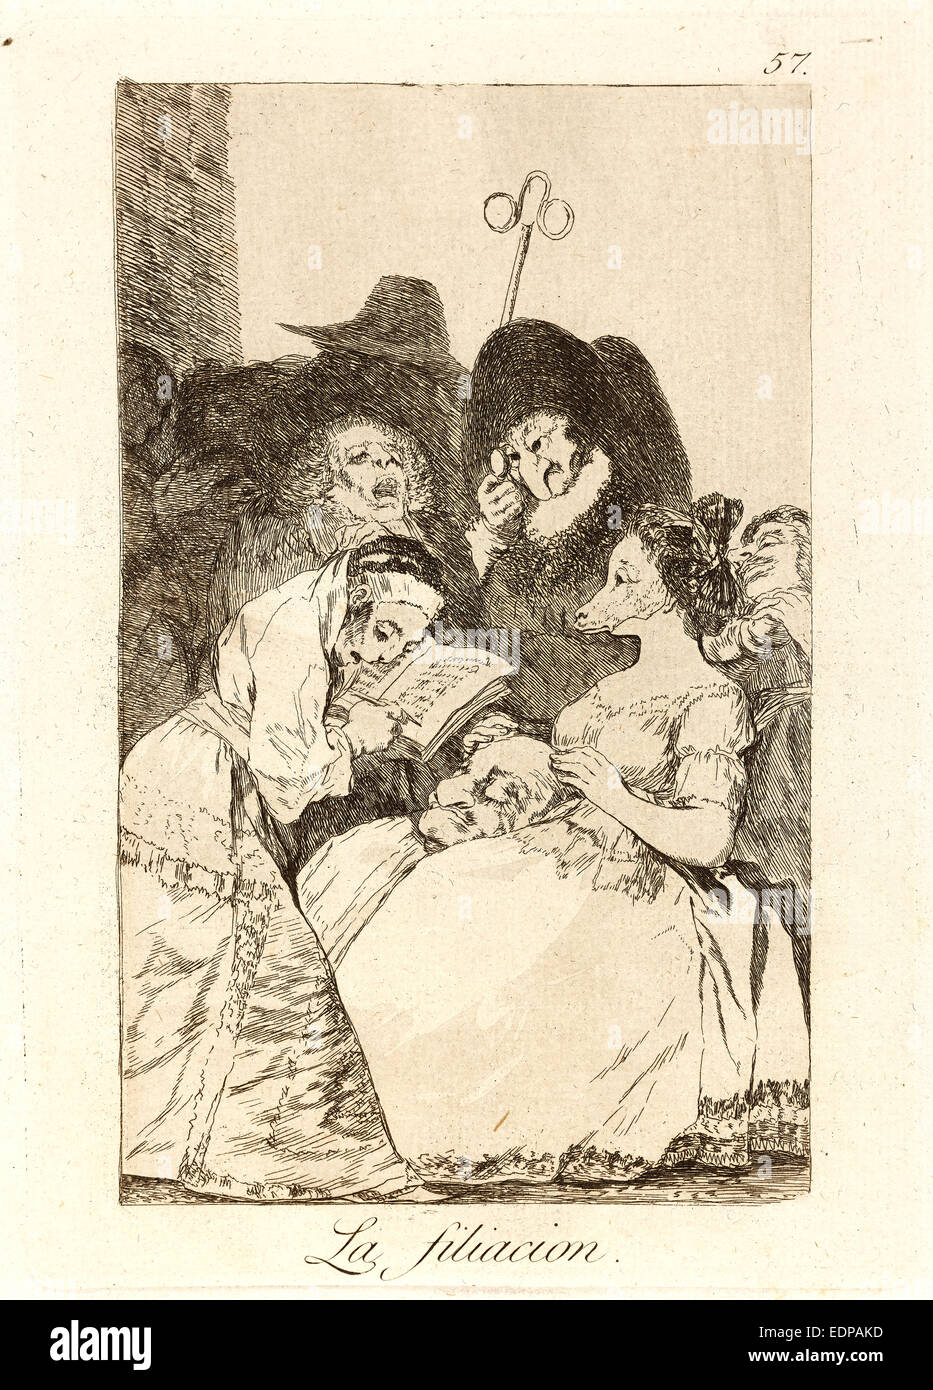 Francisco de Goya (Spanish, 1746-1828). La filiacion. (The filiation.), 1796-1797. From Los Caprichos, no. 57. Etching Stock Photo